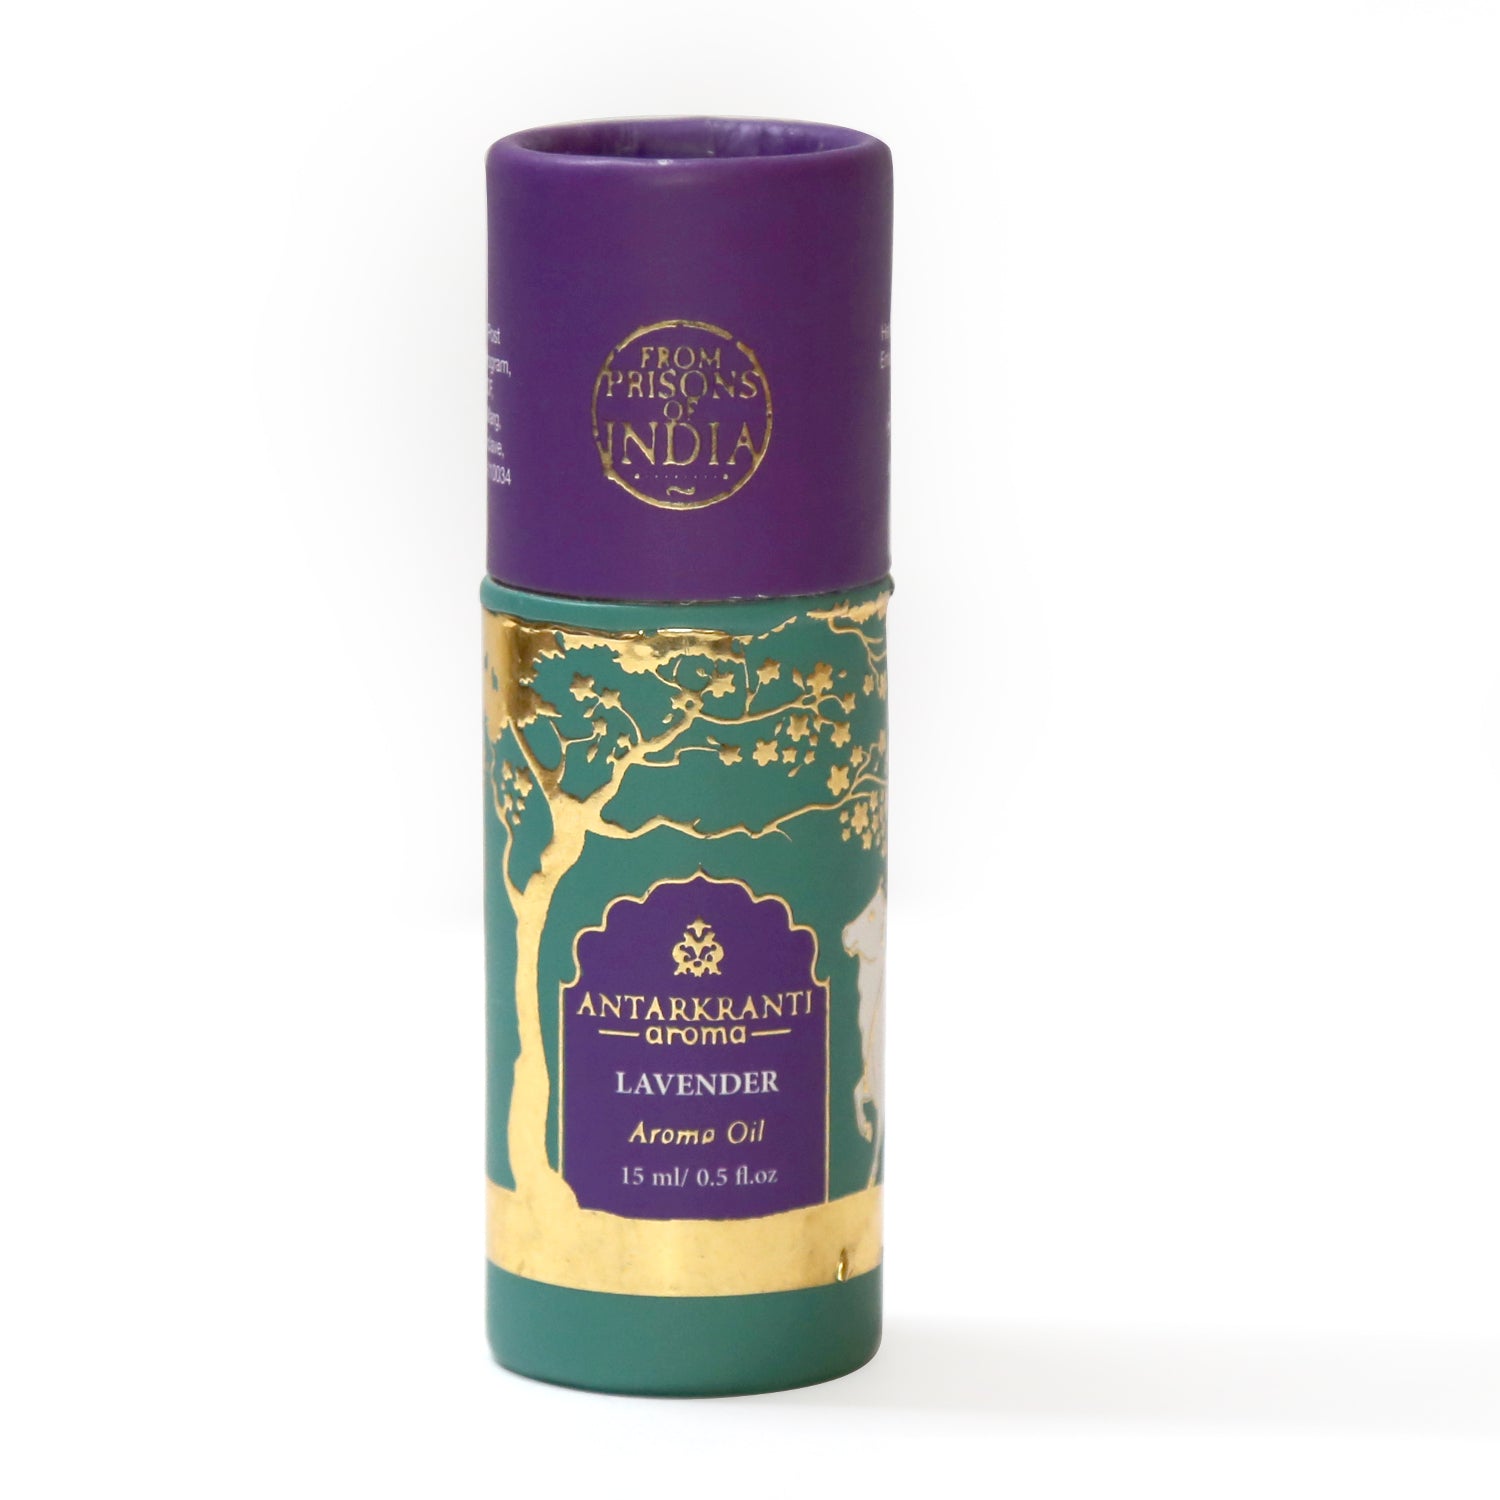 Antarkranti's Lavender Diffuser Aroma Oil: Calm Your Senses - EarthInspired Collection